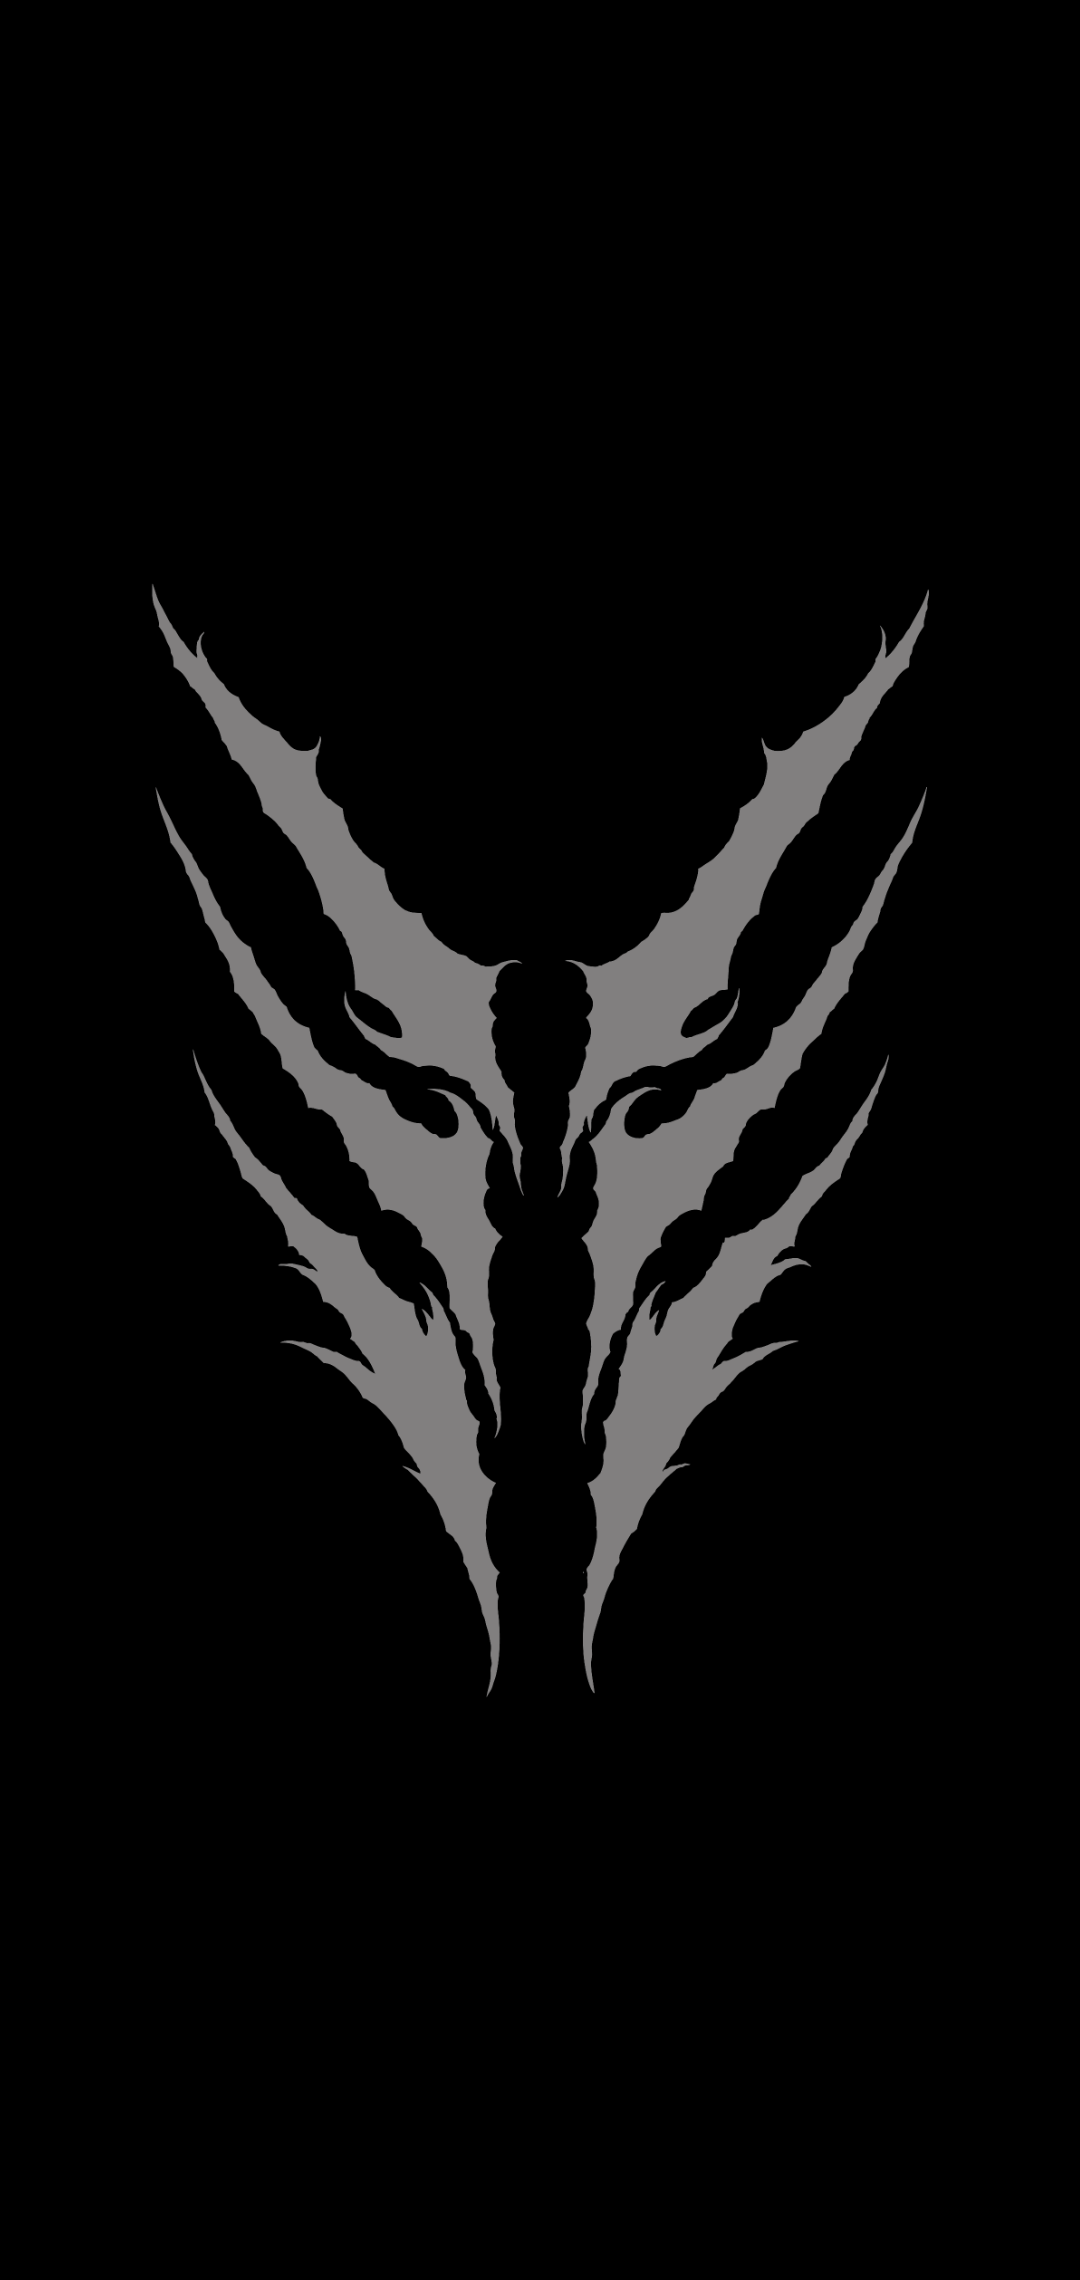 General 1080x2280 Orbit Culture logo death metal minimalism black background